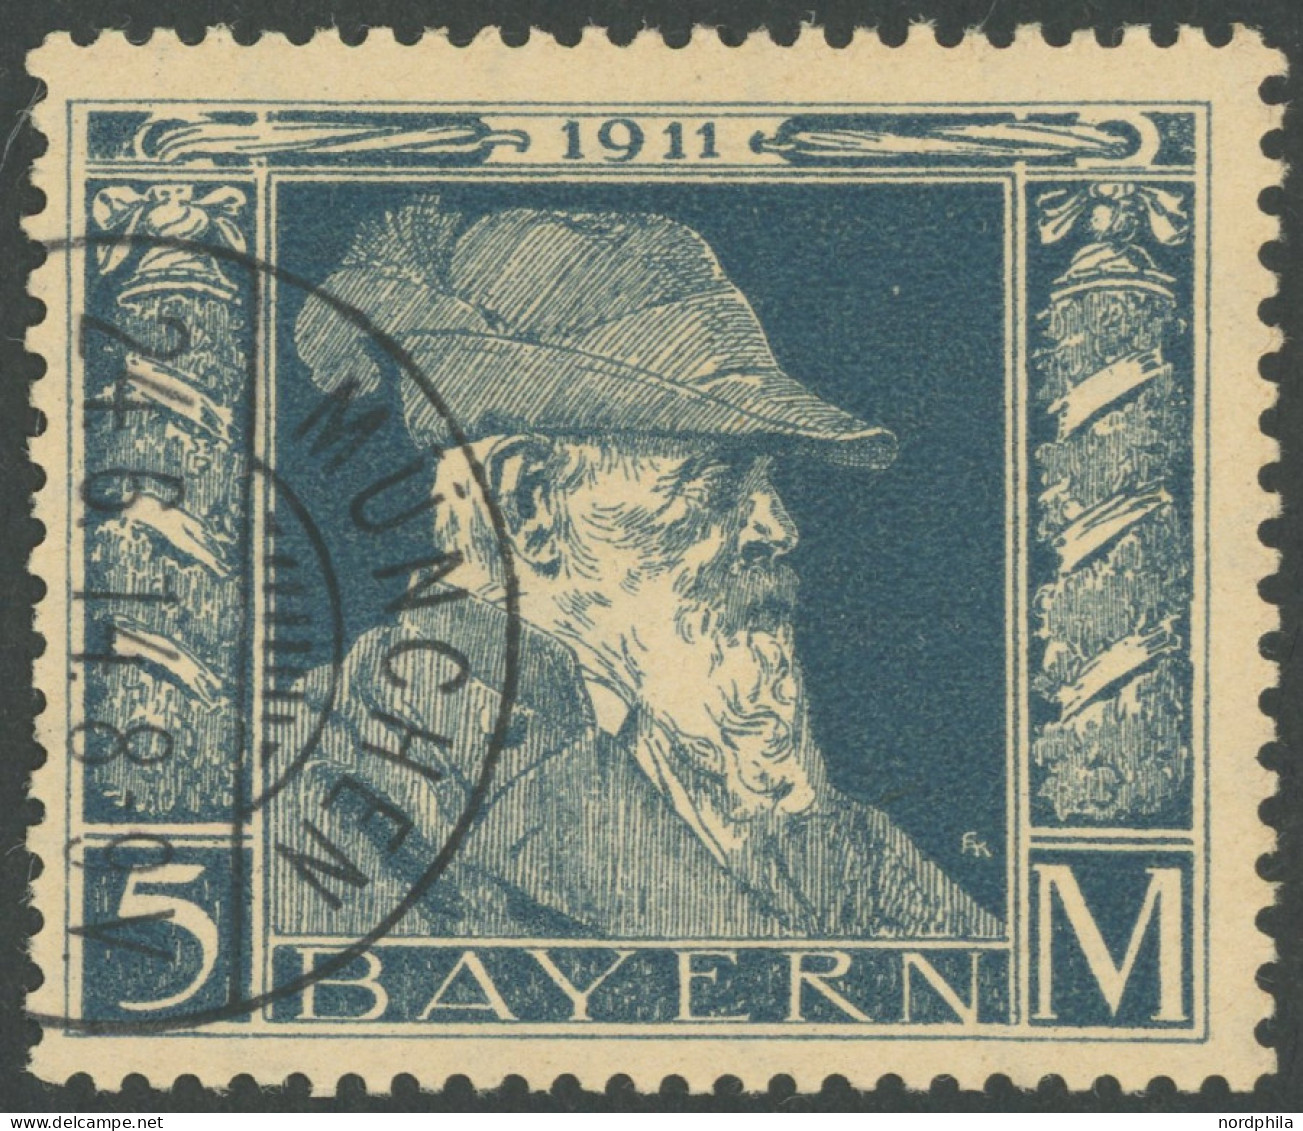 BAYERN 89II O, 1911, 5 M. Luitpold, Type II, Pracht, Mi. 220.- - Usati